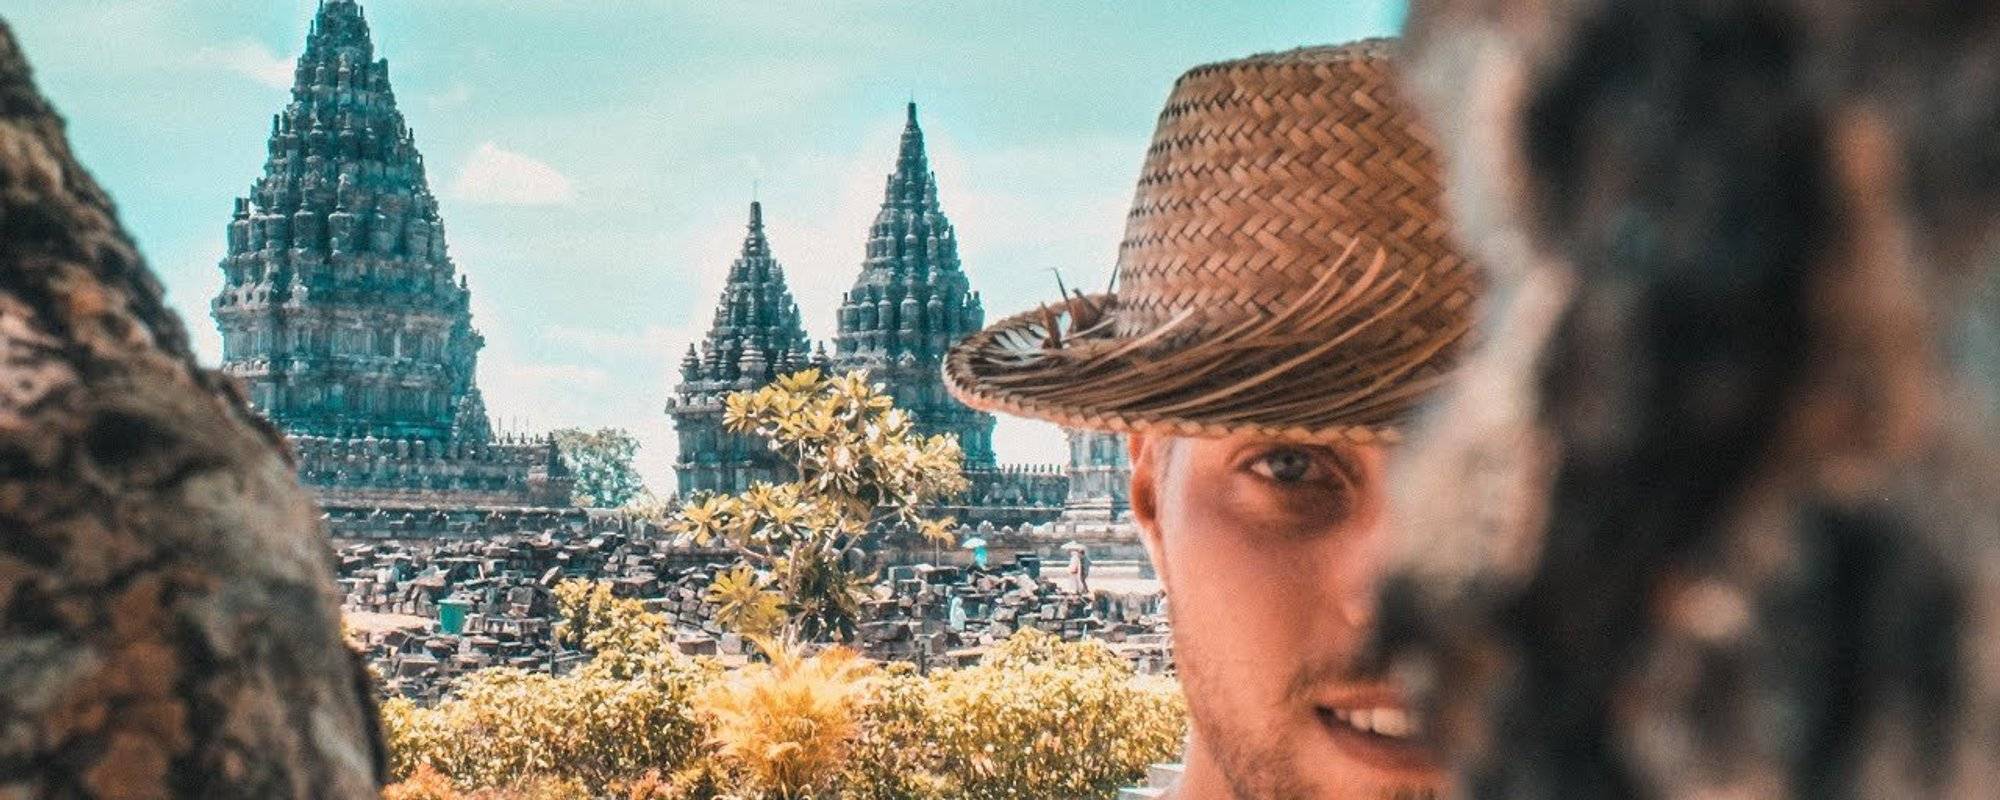 Felt like Indiana Jones exploring the Prambanan temple area!